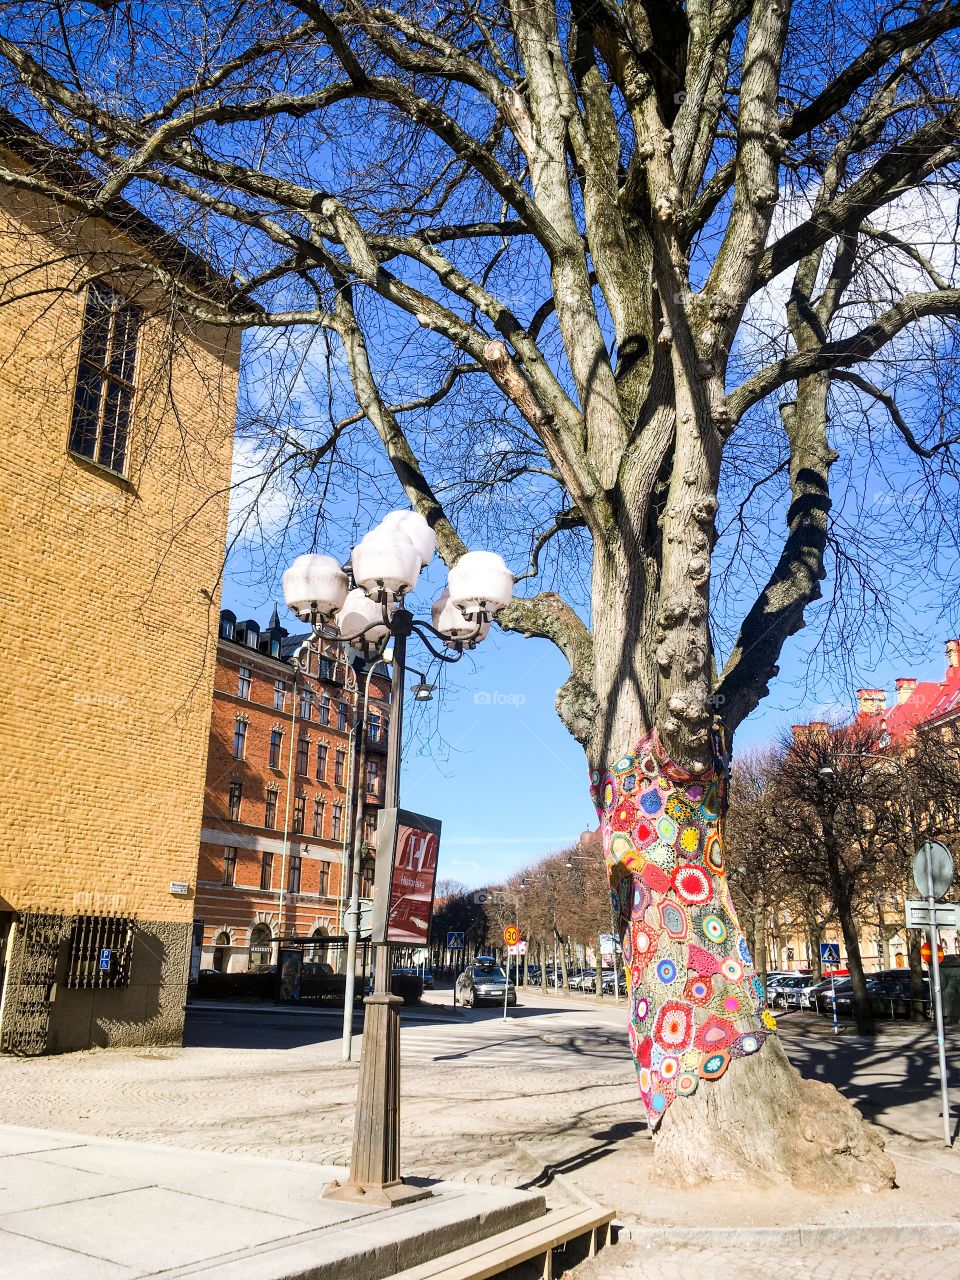 yarnbombing at stockholm history museum